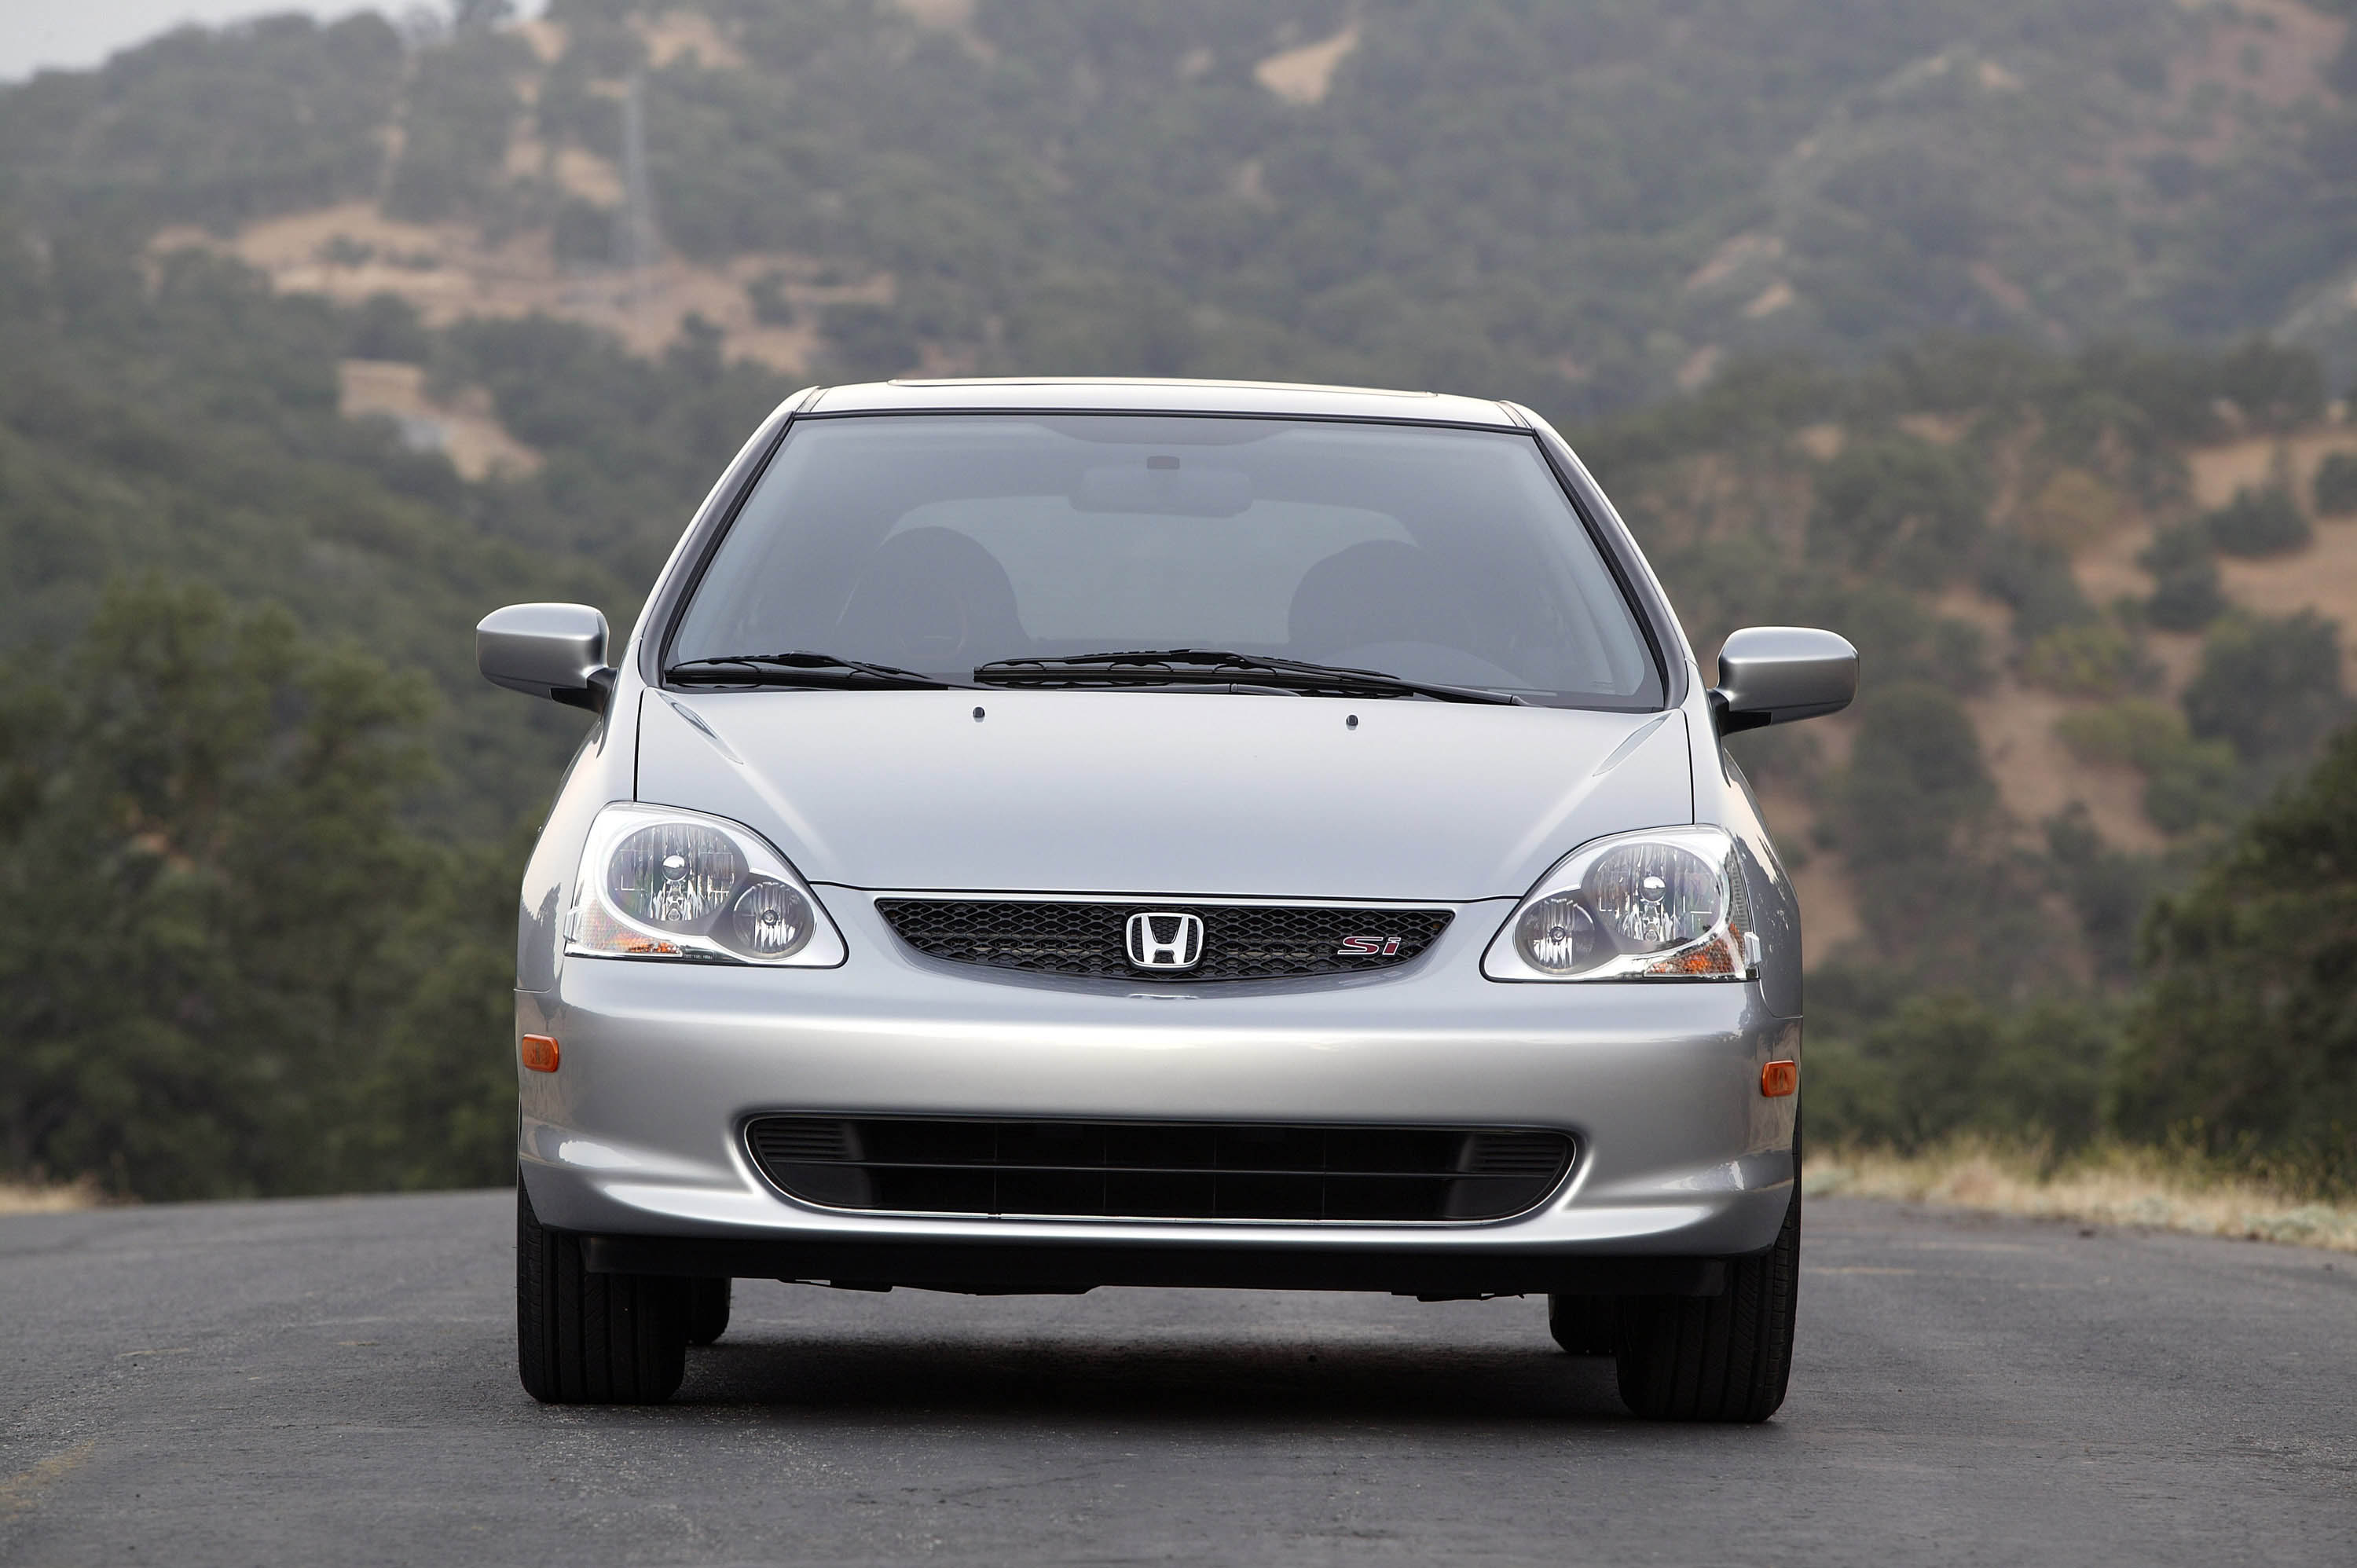 2004 Honda Civic Si - HD Pictures @ carsinvasion.com